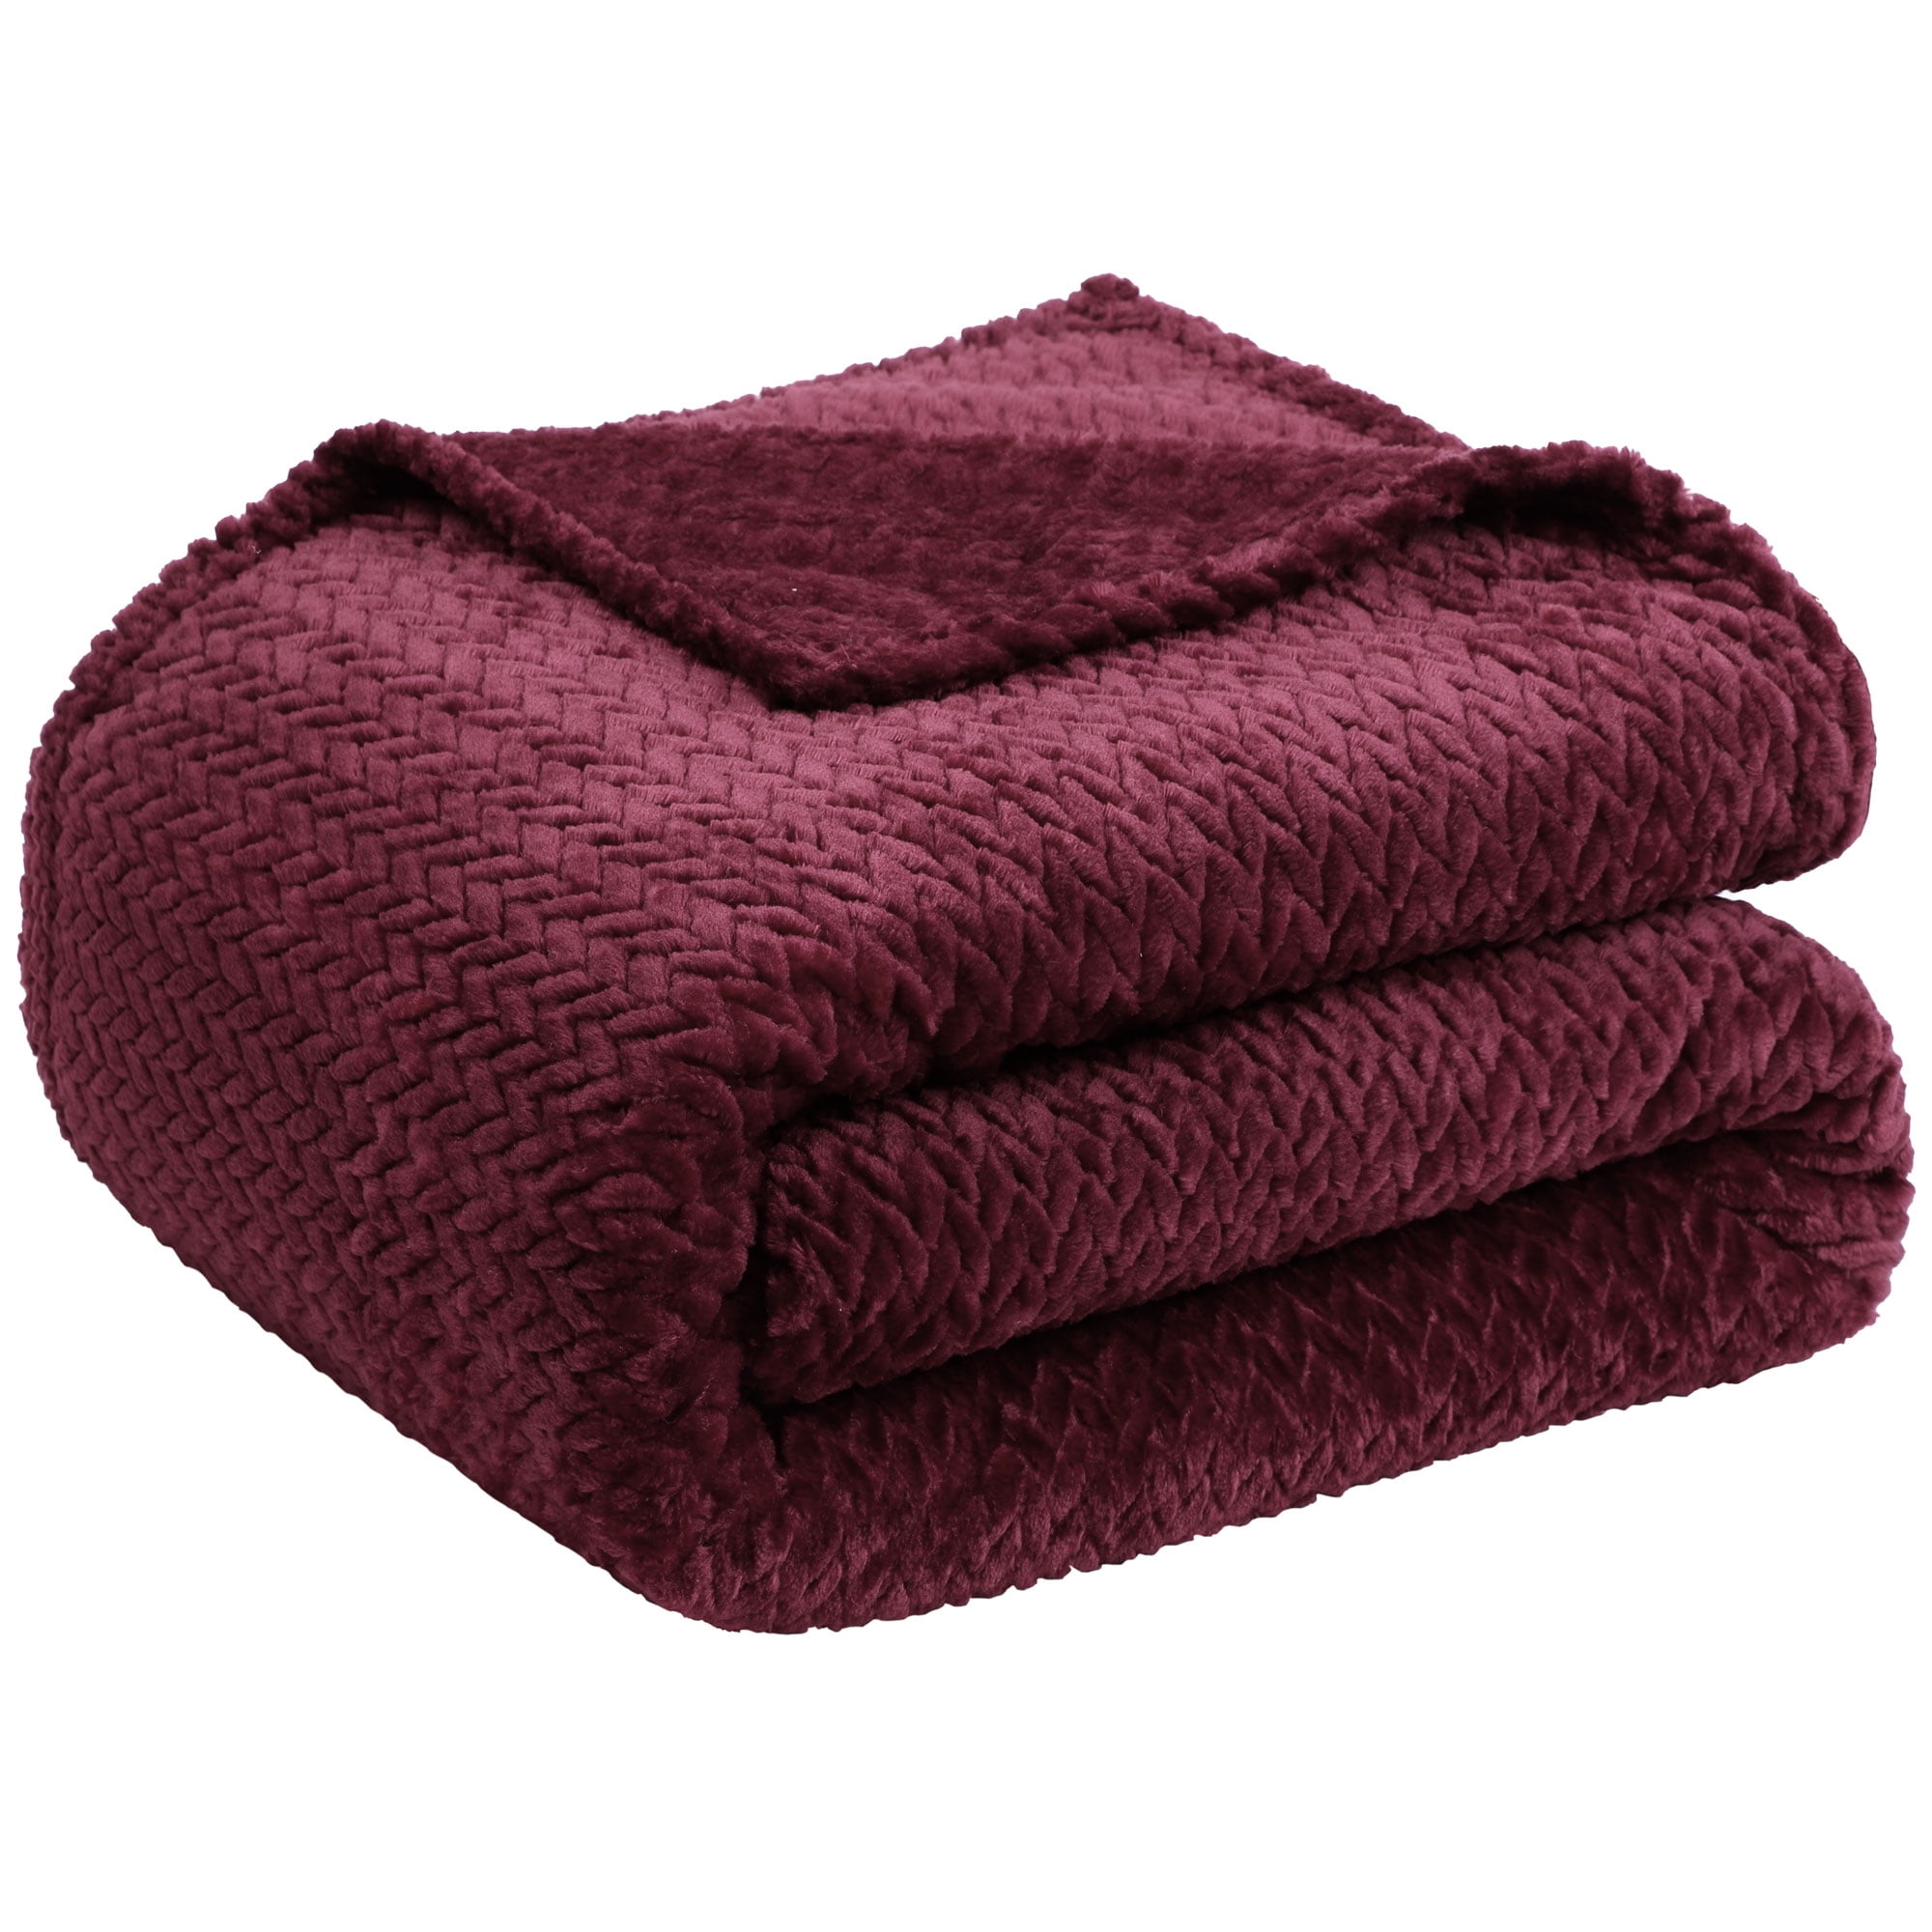 Unique Bargains Soft Flannel Fleece Sofa Throw Blanket, 59 x 78, Teal 